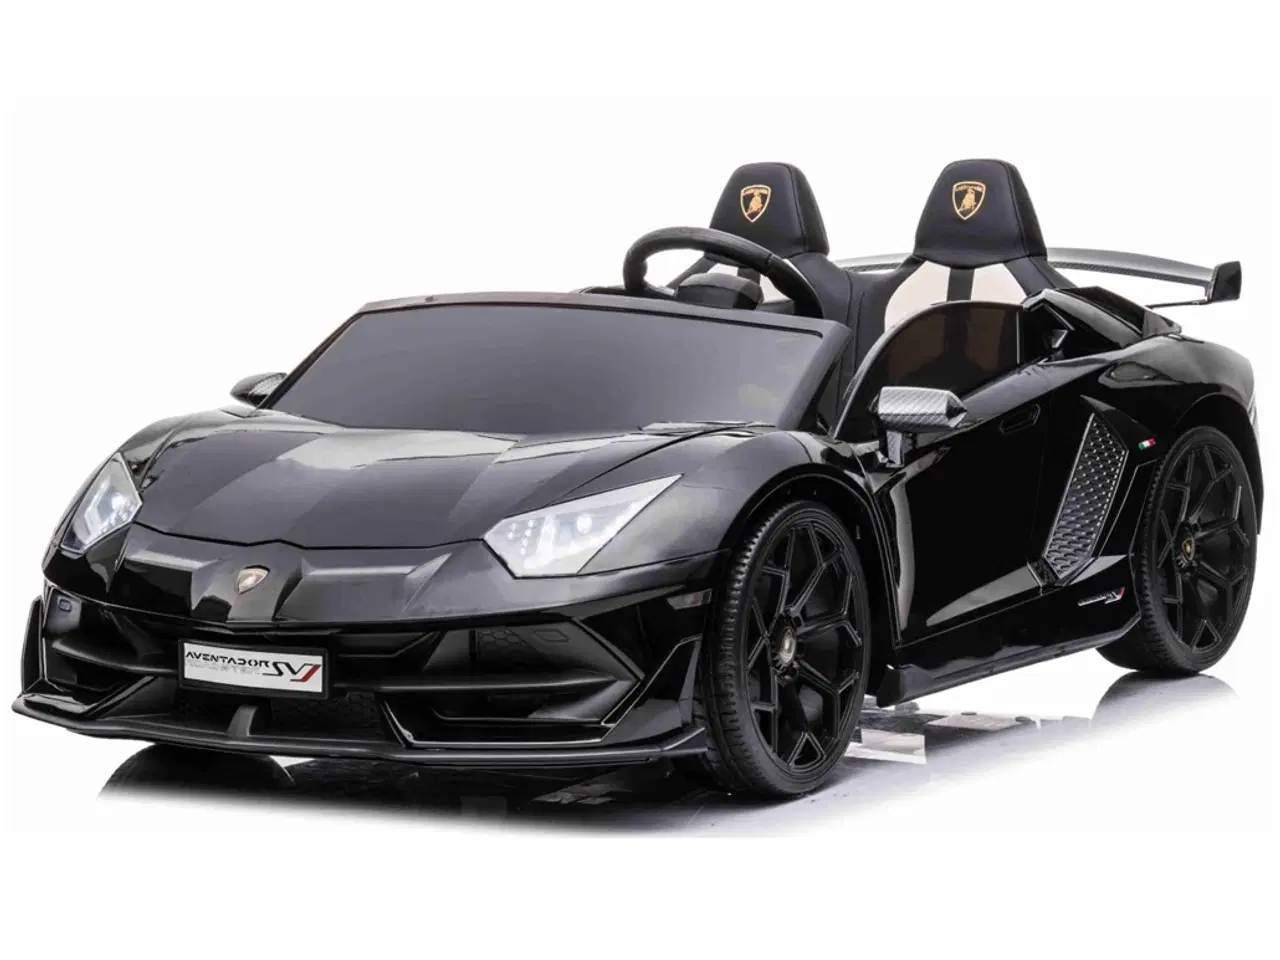 Billede 3 - Ny Lamborghini Aventador elbil til børn